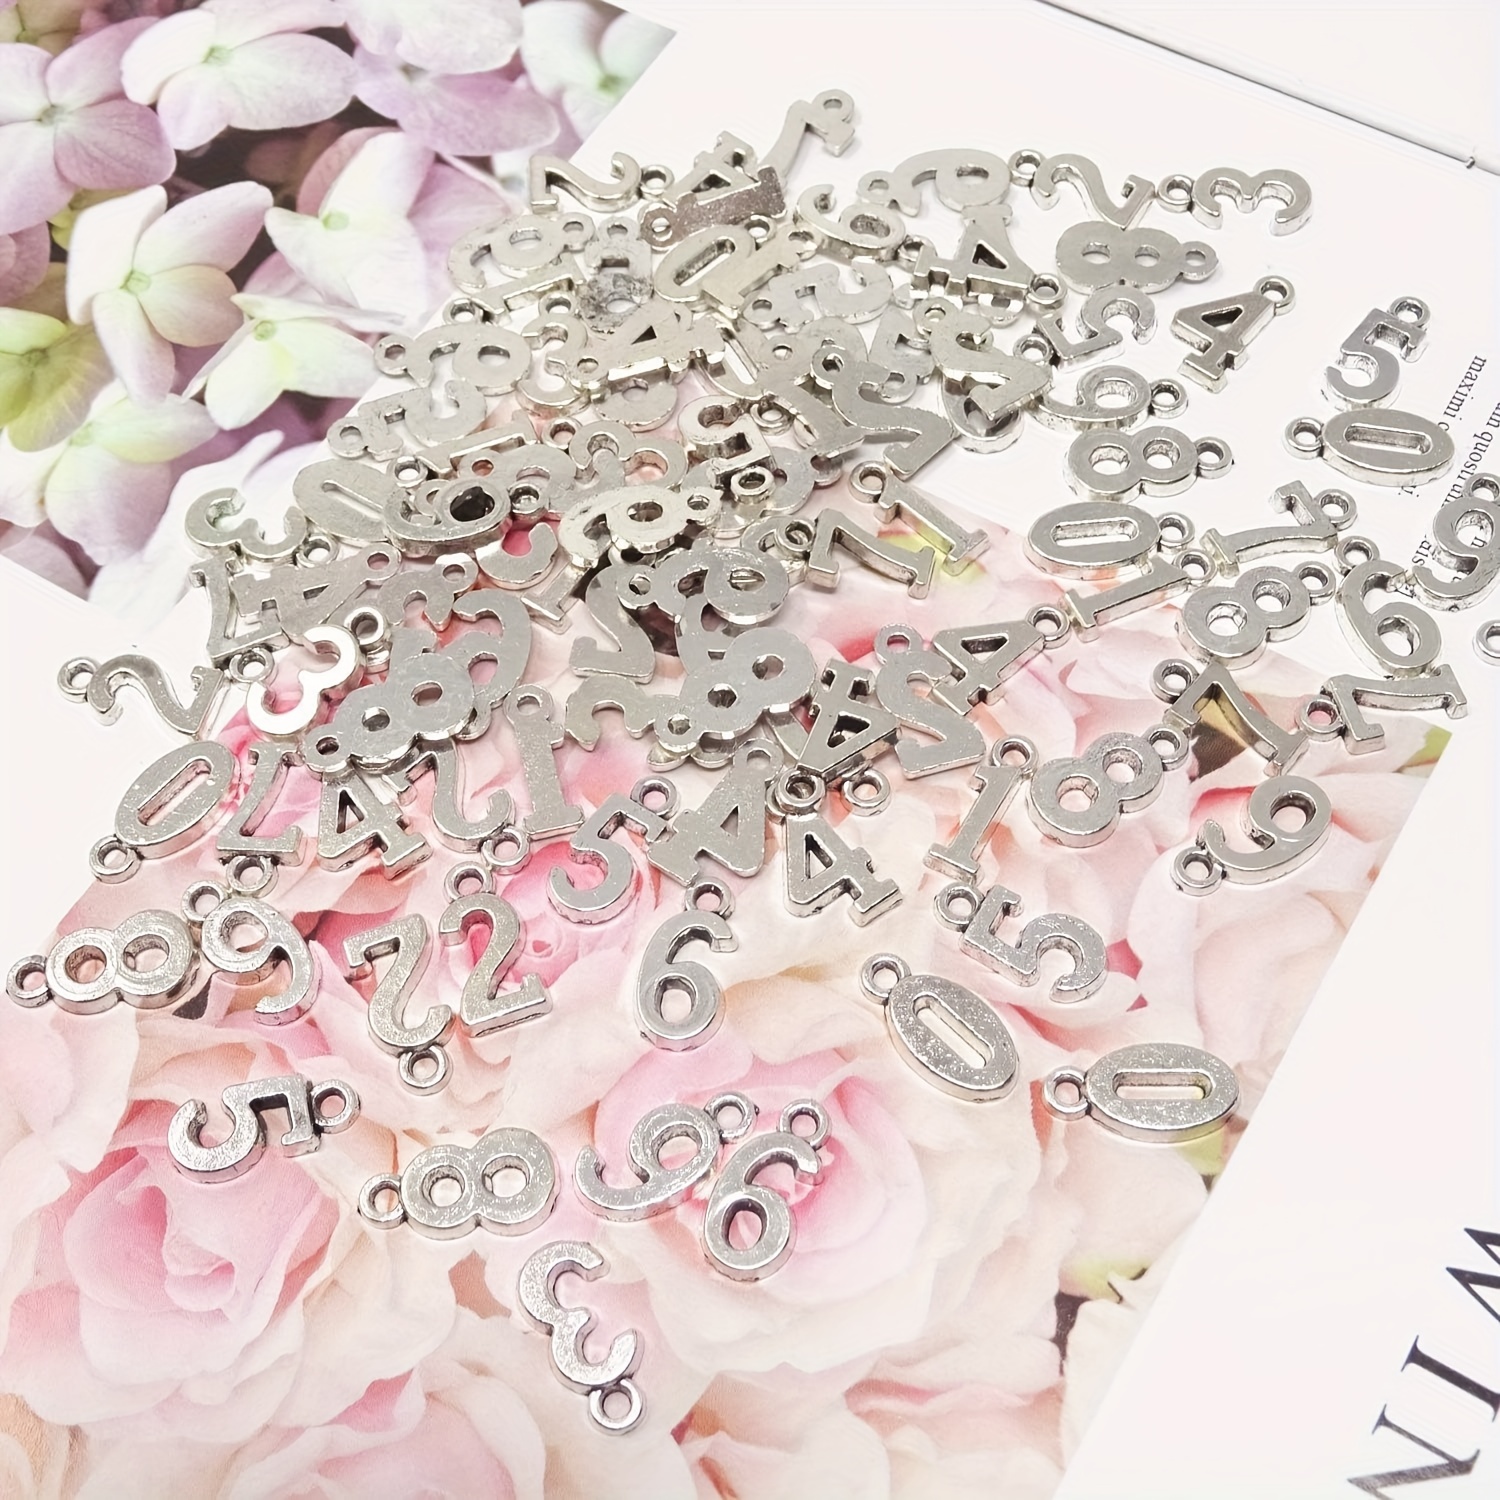 Roses Bracelet W Pink, Gray, White, Rhinestone Beads - Roses Jewelry Flowers 8